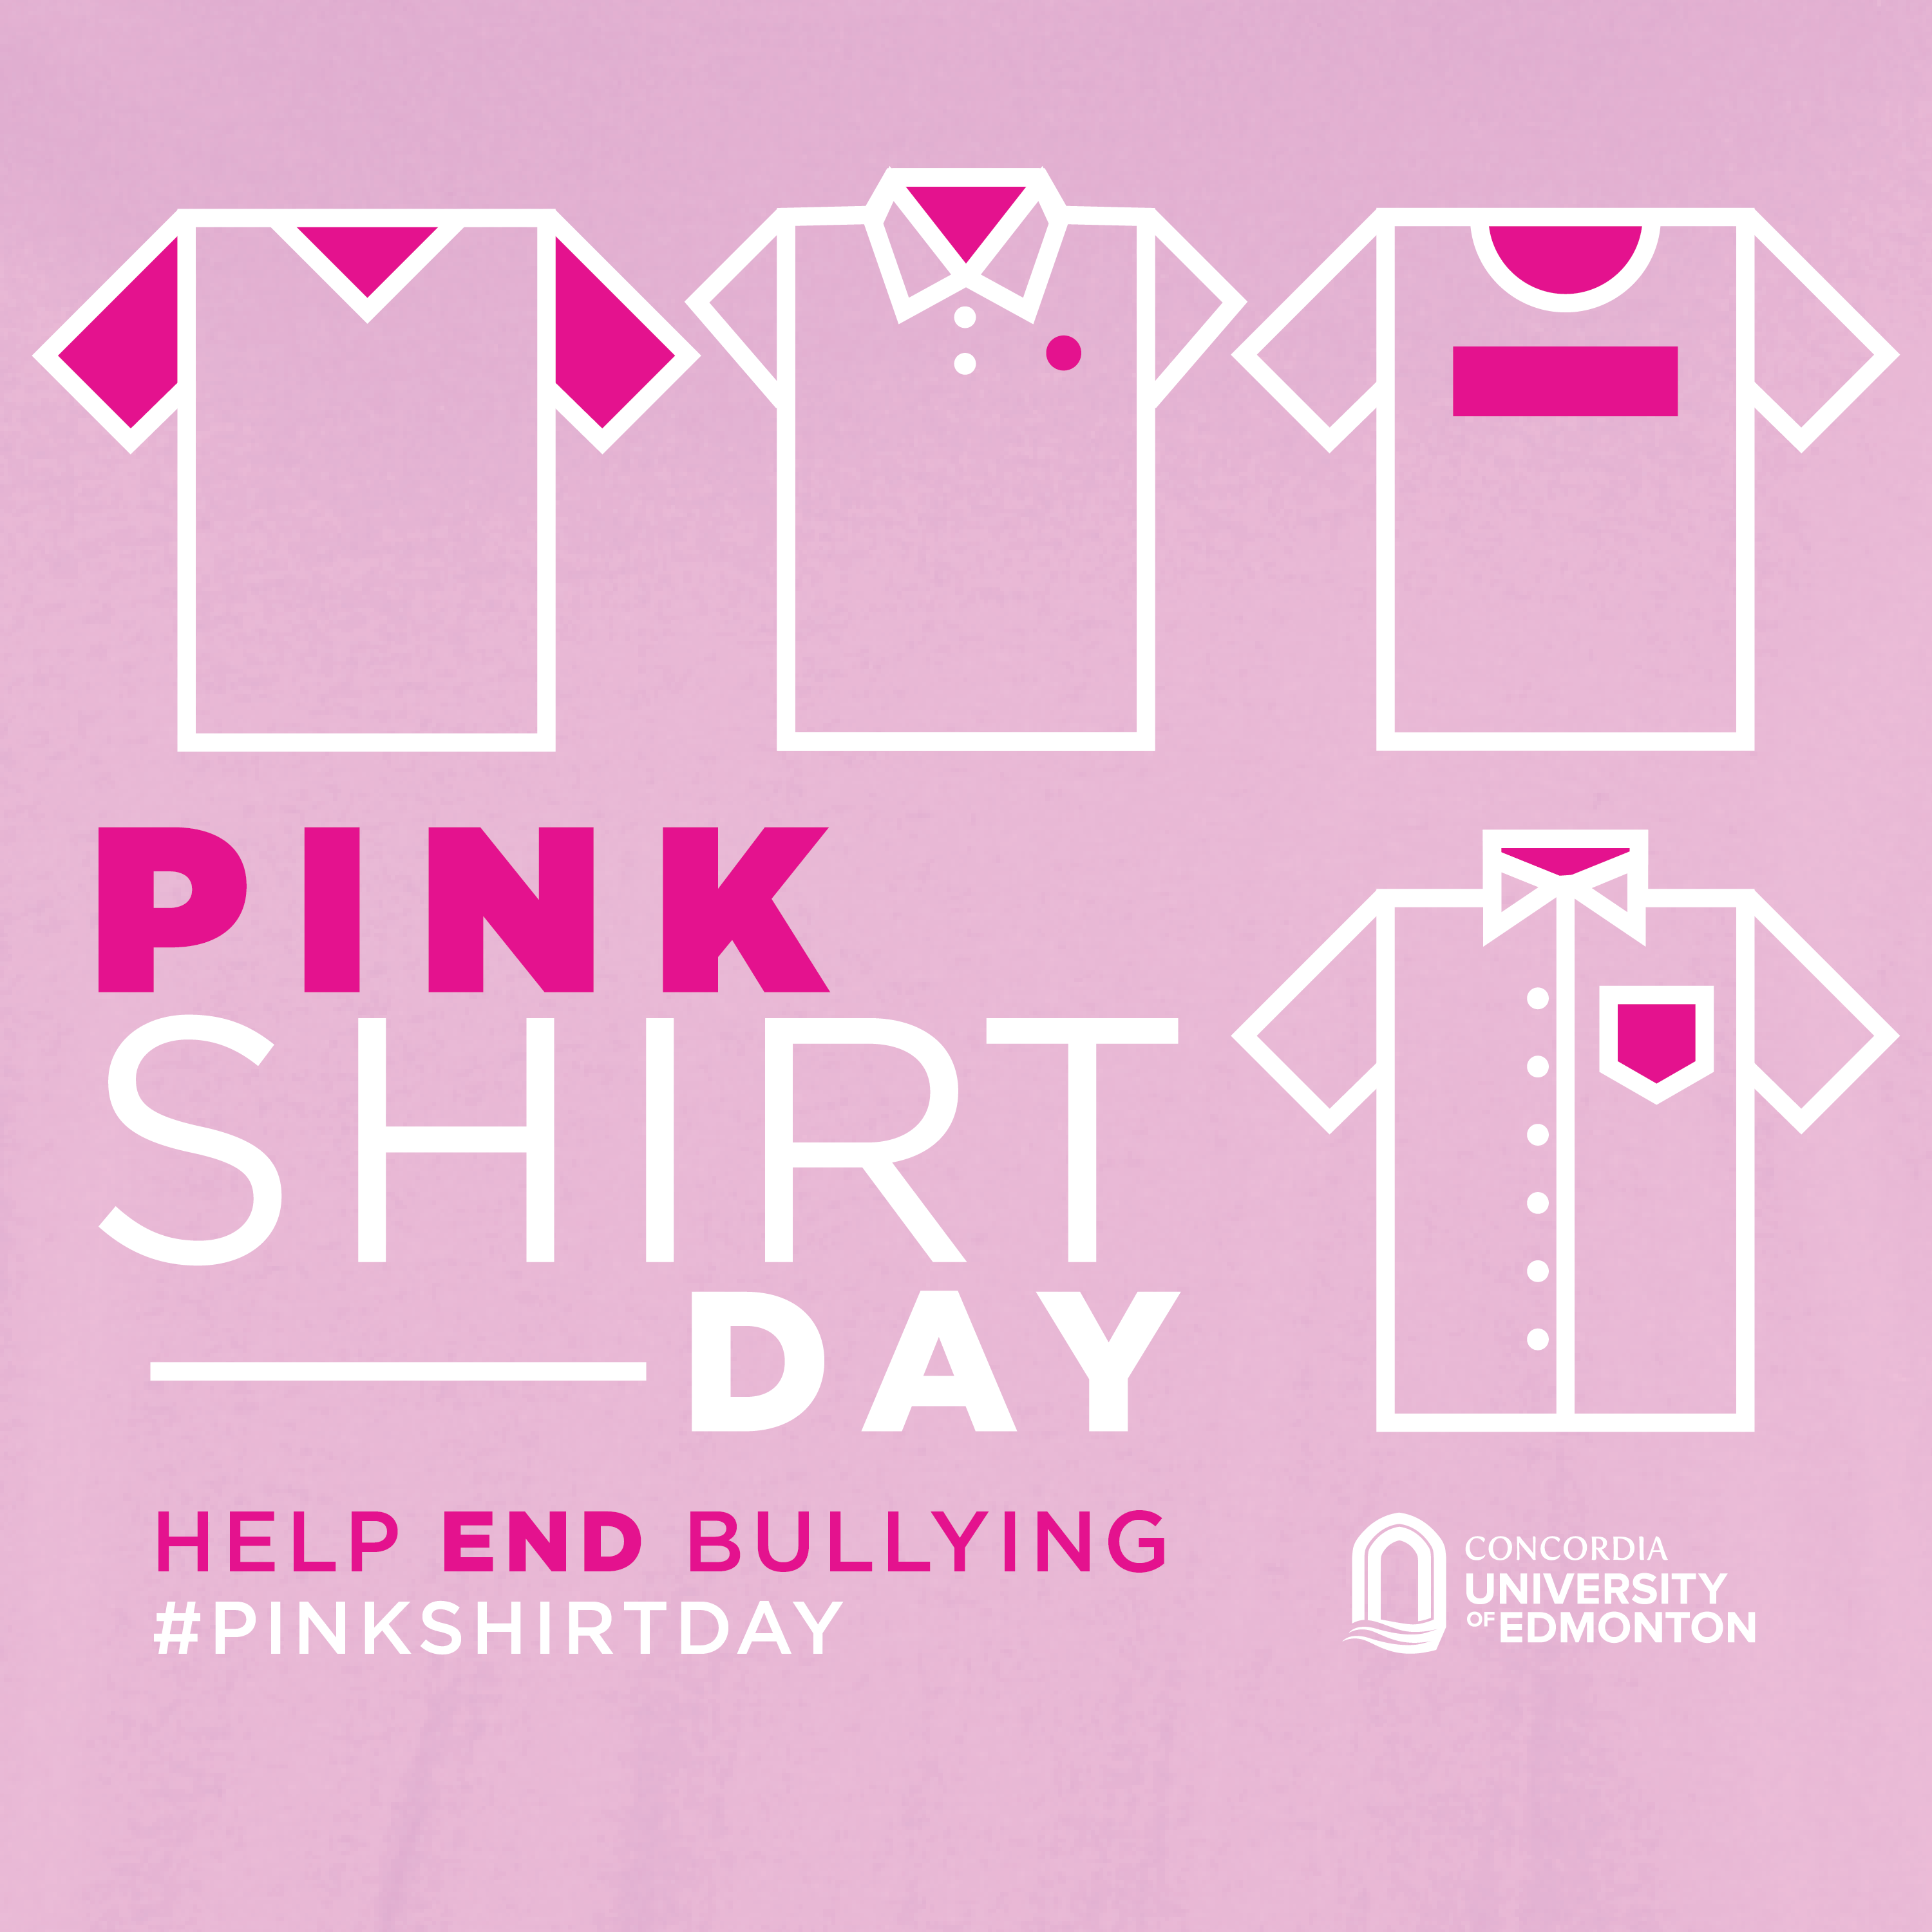 pink-shirt-day-wednesday-february-27-2019-concordia-university-of